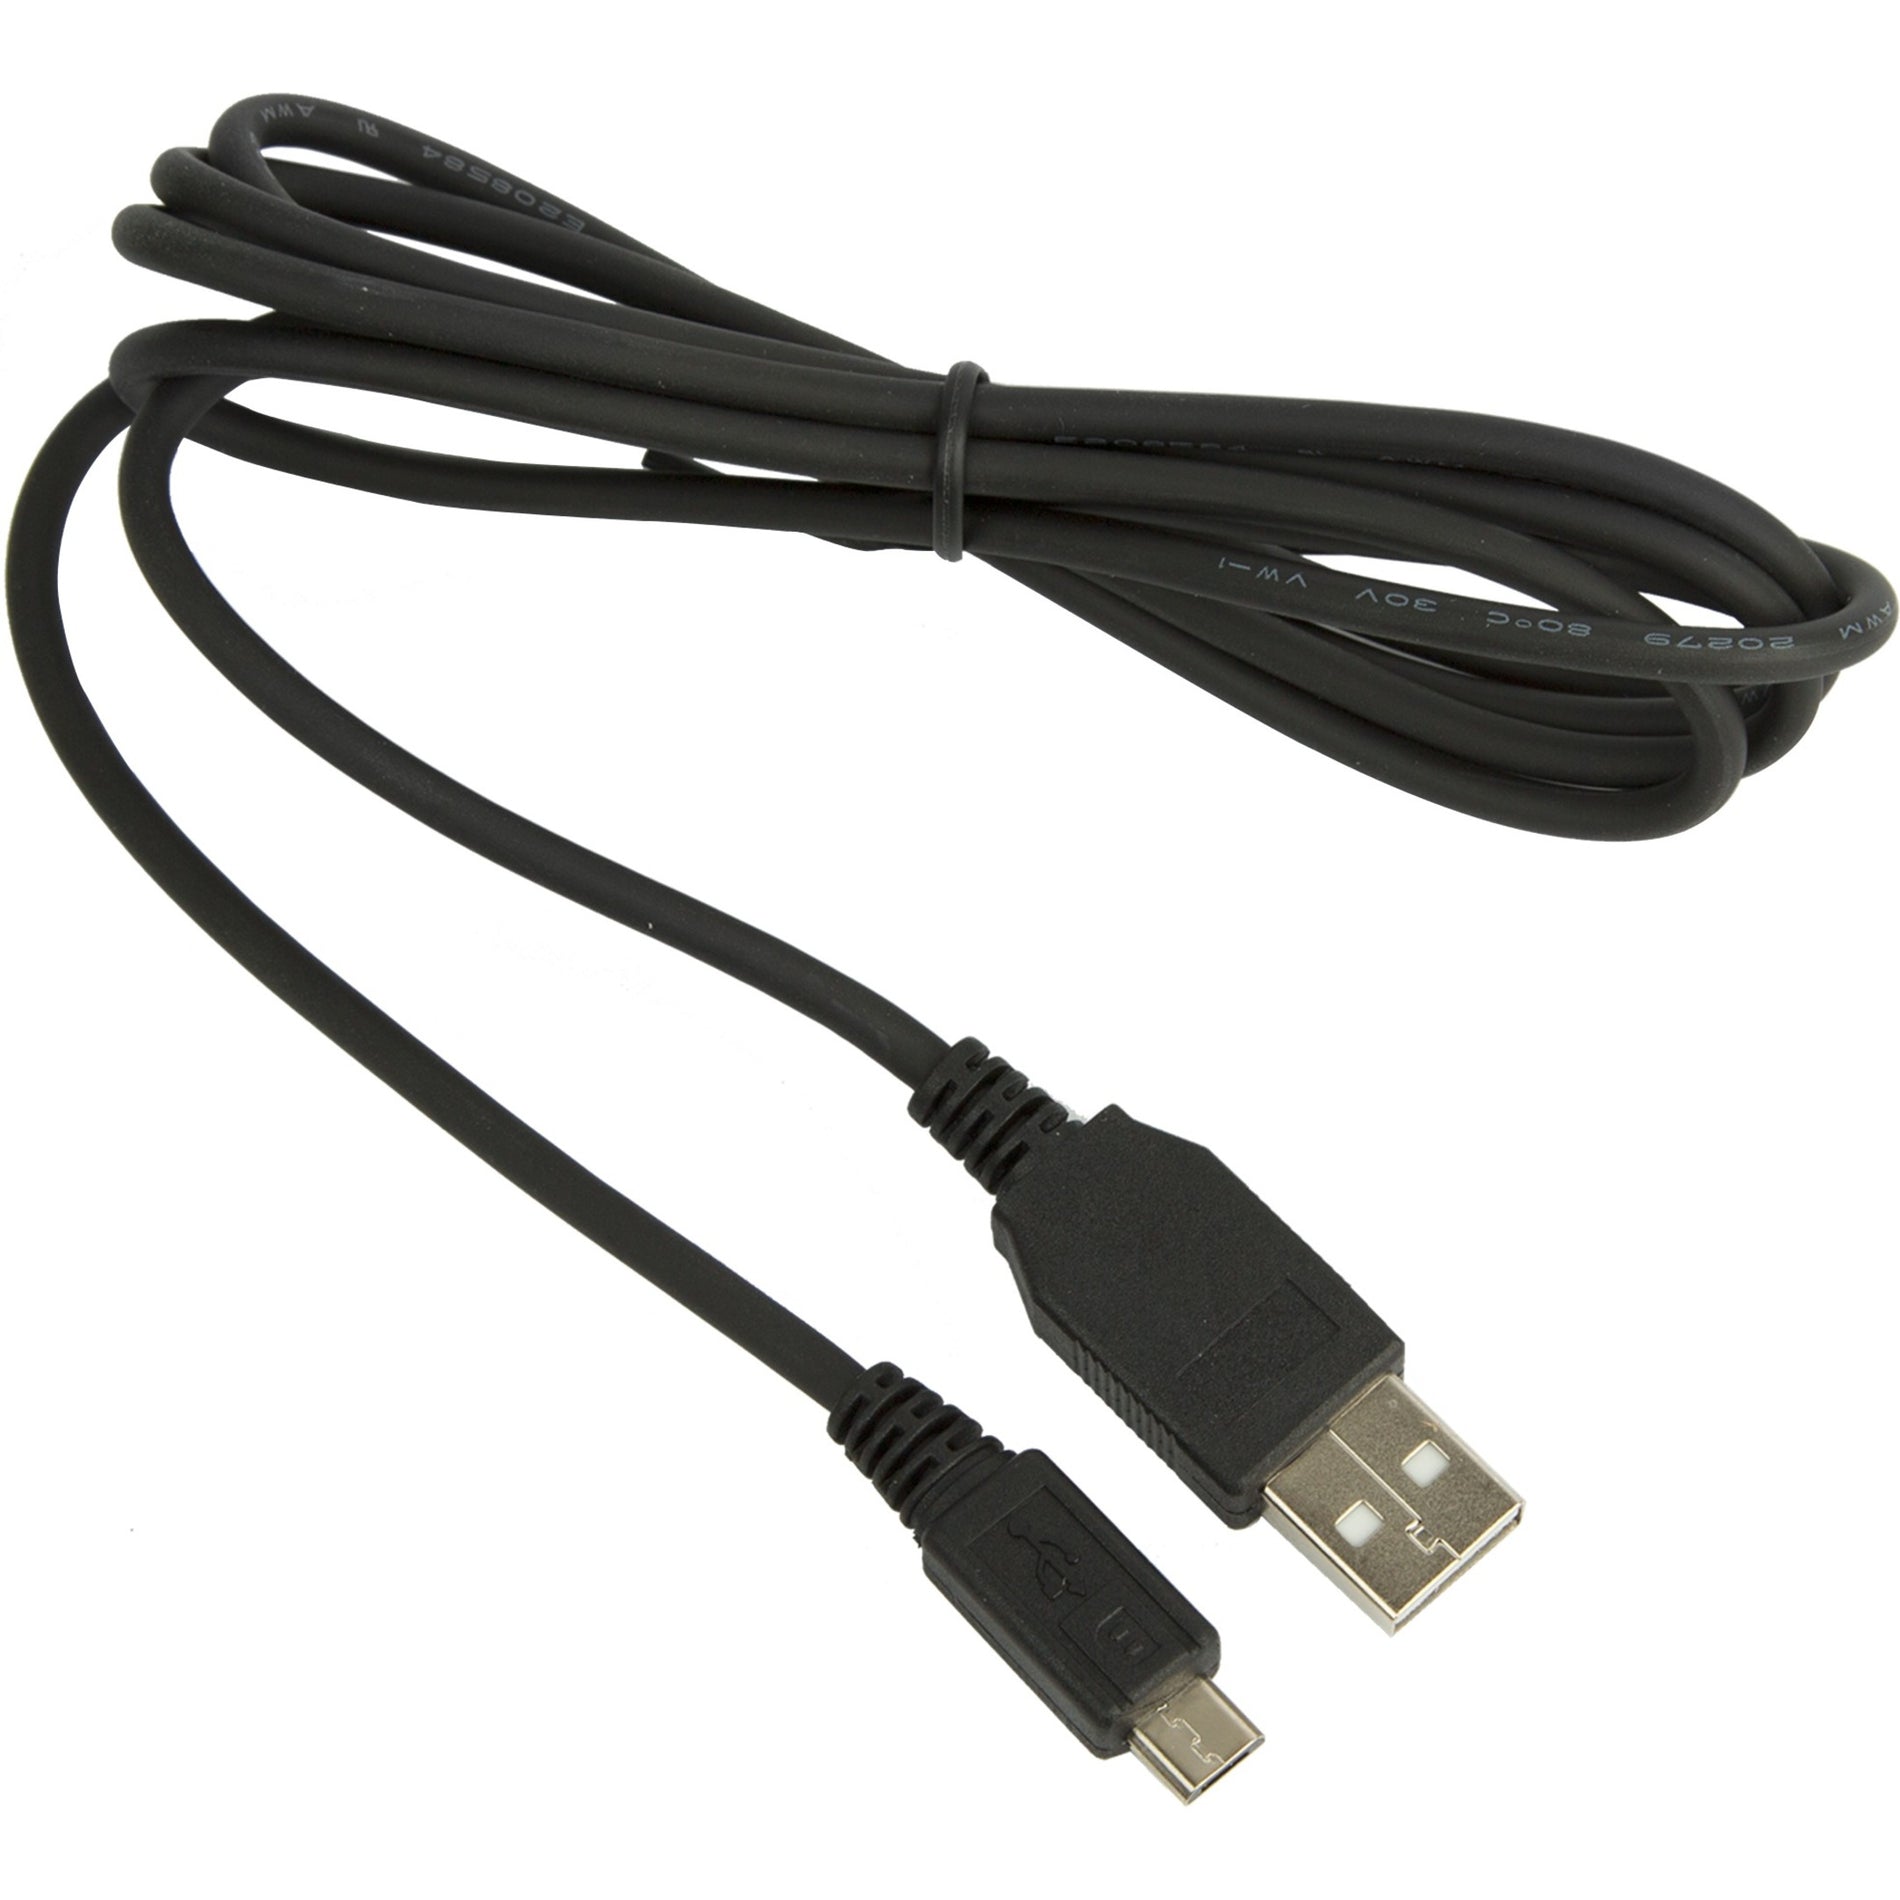 Jabra 14201-26 Micro USB Cable, Data Transfer Cable, 4.92 ft, Black